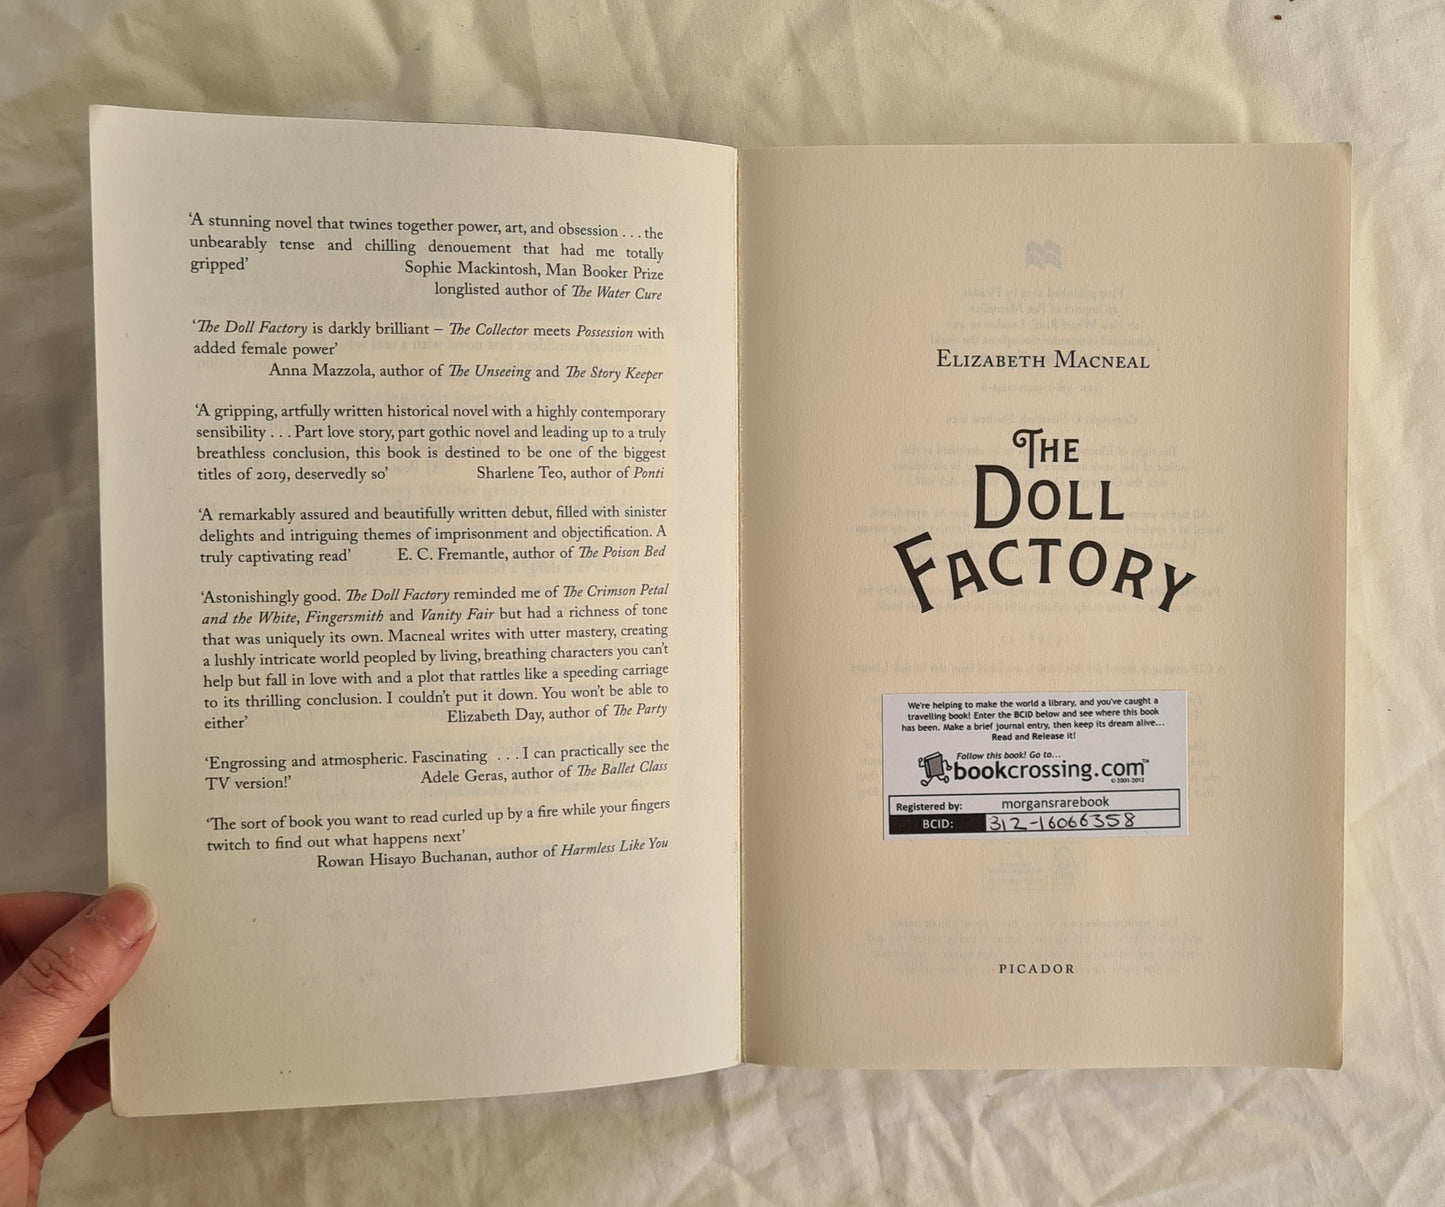 The Doll Factory by Elizabeth Macneal